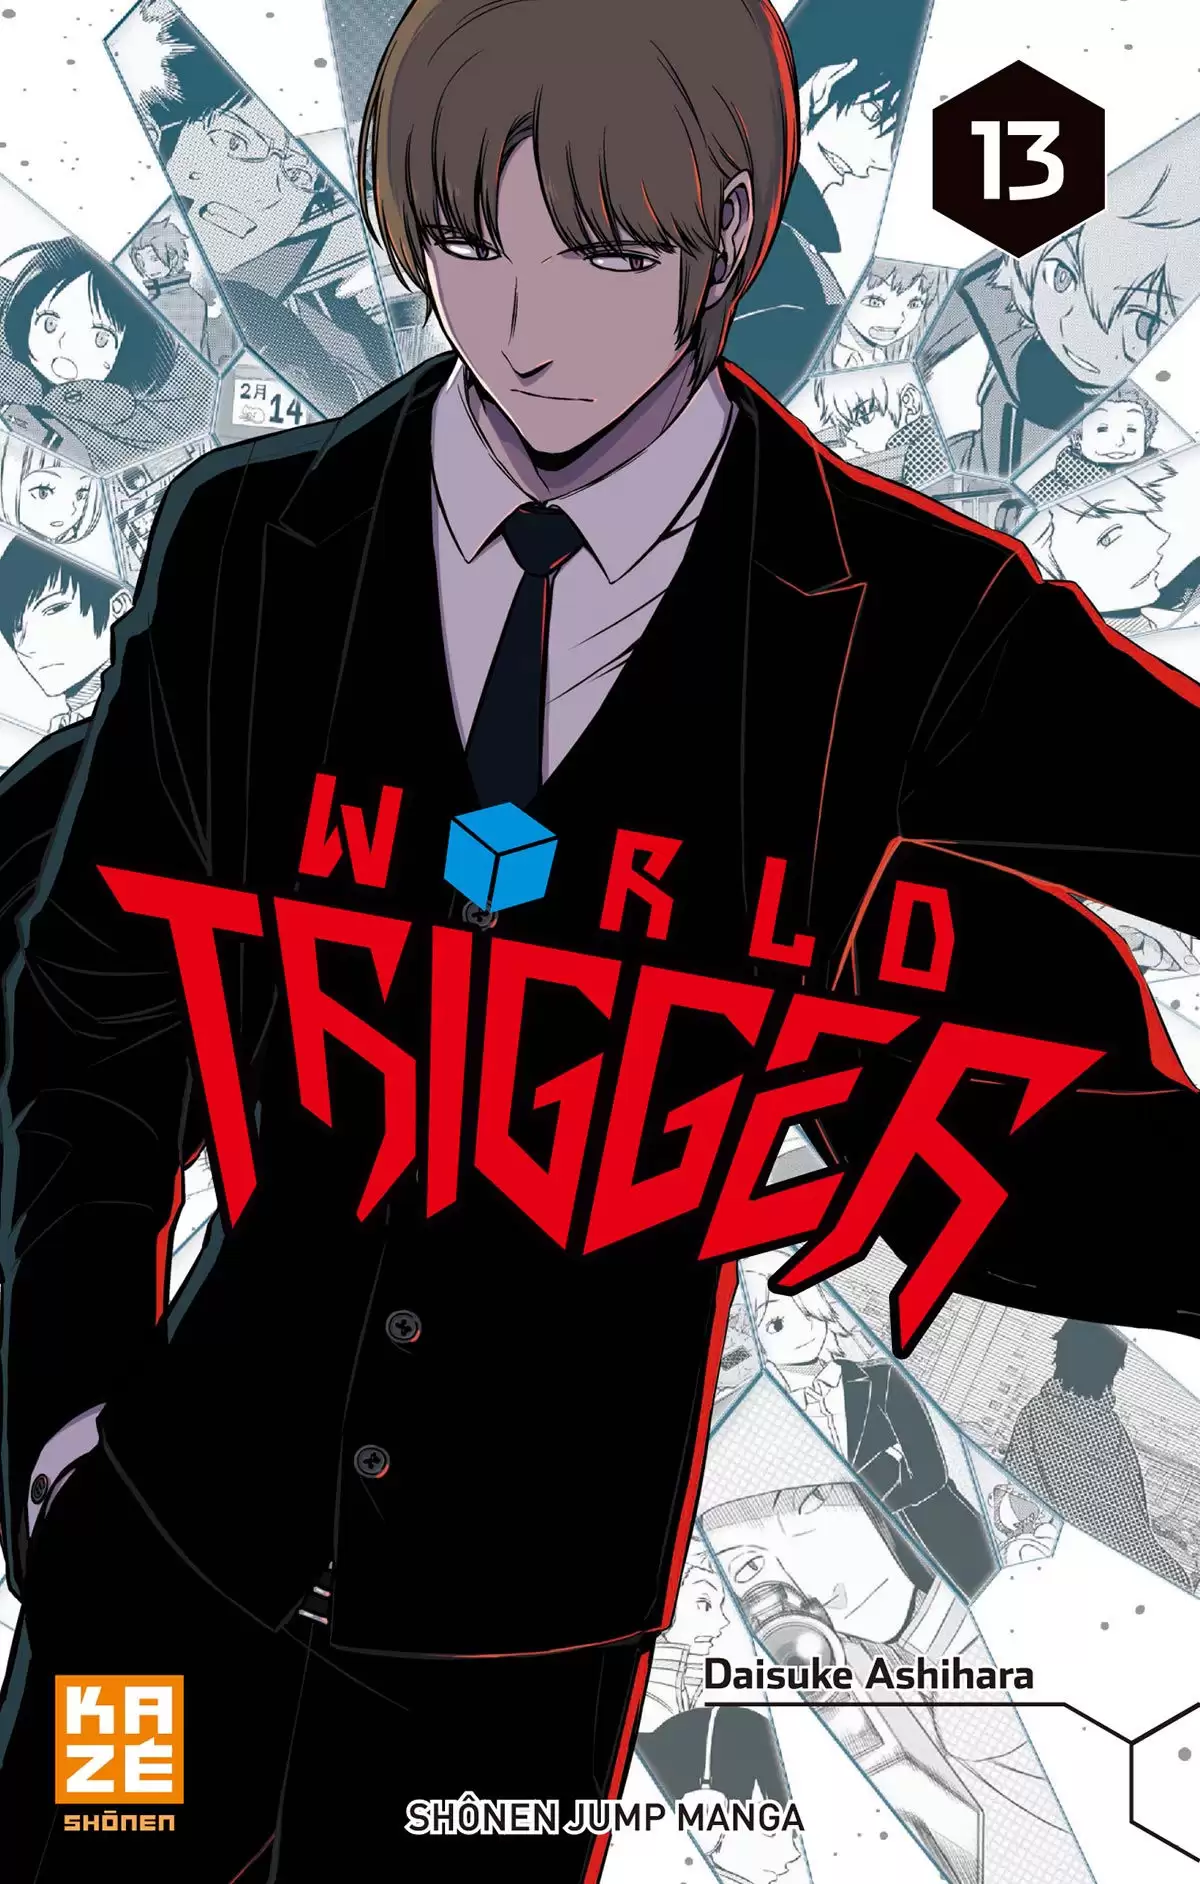 World Trigger Volume 13 page 1